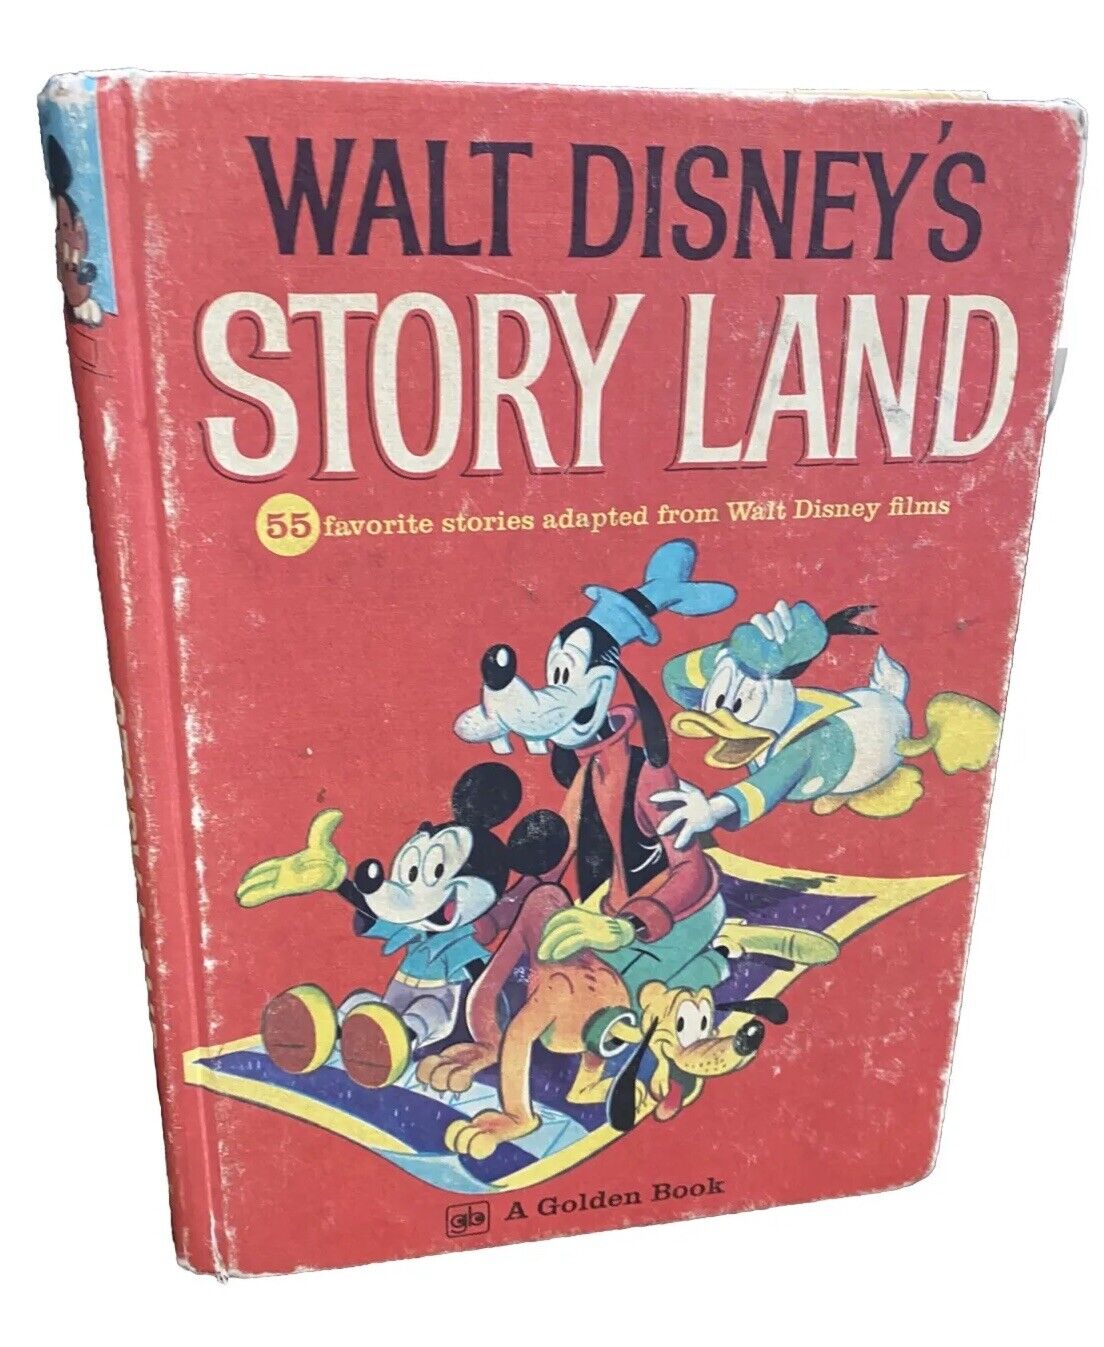 Vtg Walt Disney Story Land Hardcover 1962 Classic Stories Golden Book Tar Baby